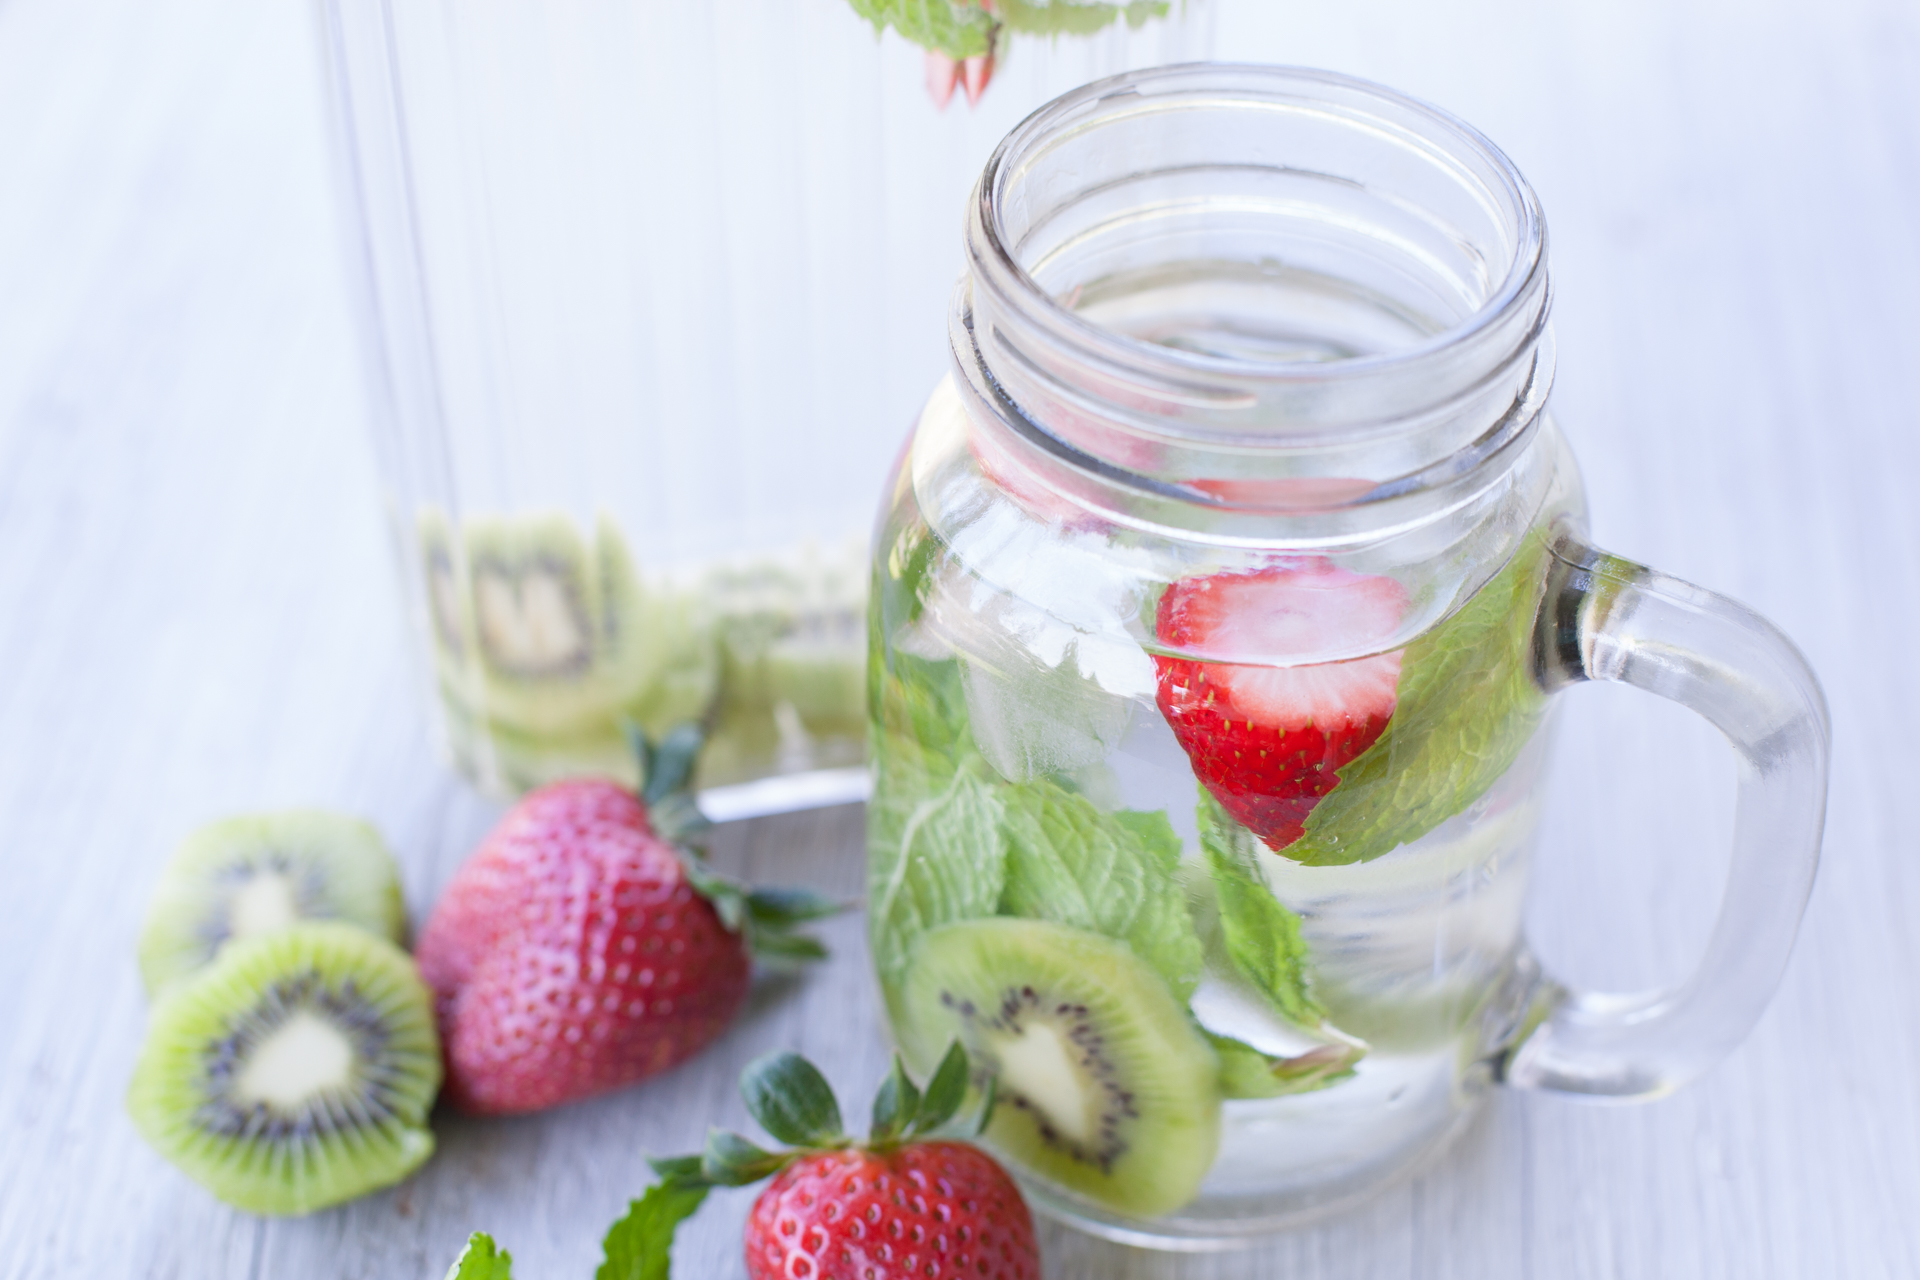 https://eatingrichly.com/wp-content/uploads/2015/05/strawberry-kiwi-water-0992.jpg